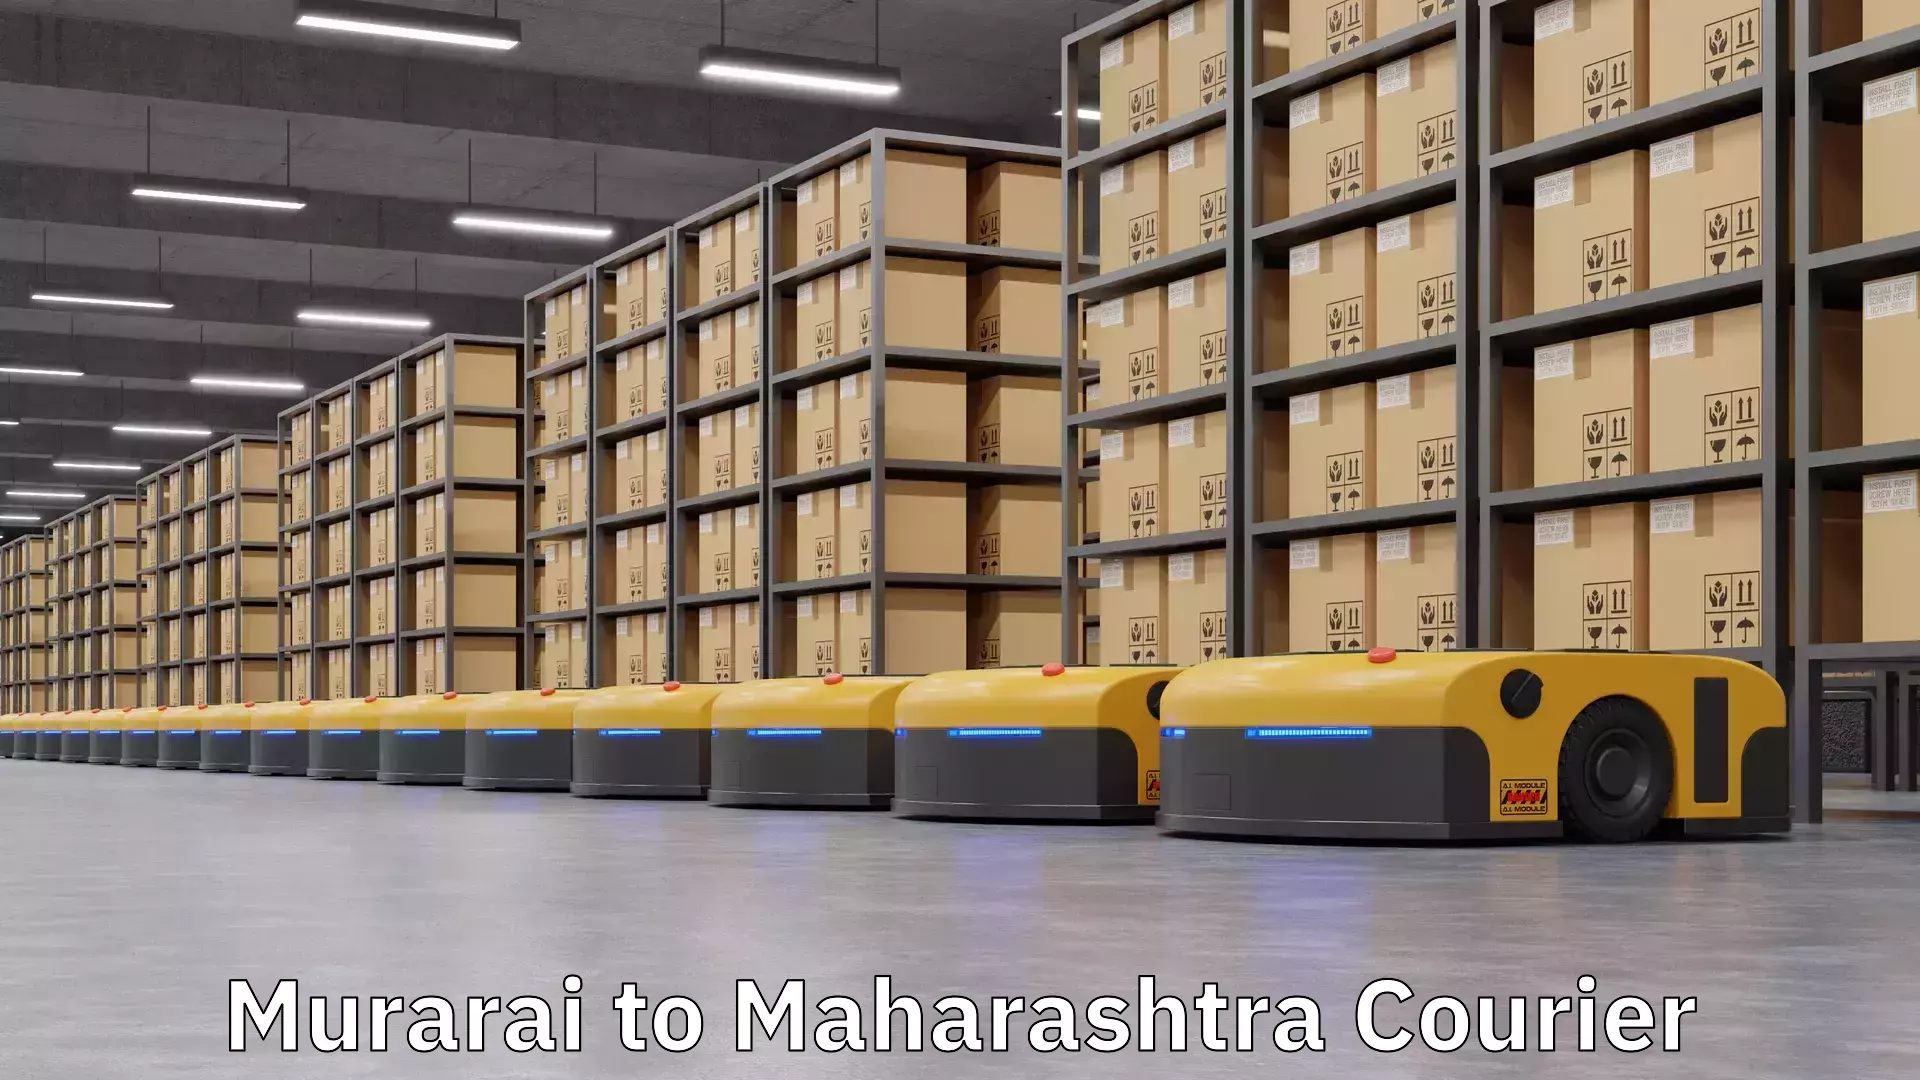 Local delivery service Murarai to Maharashtra